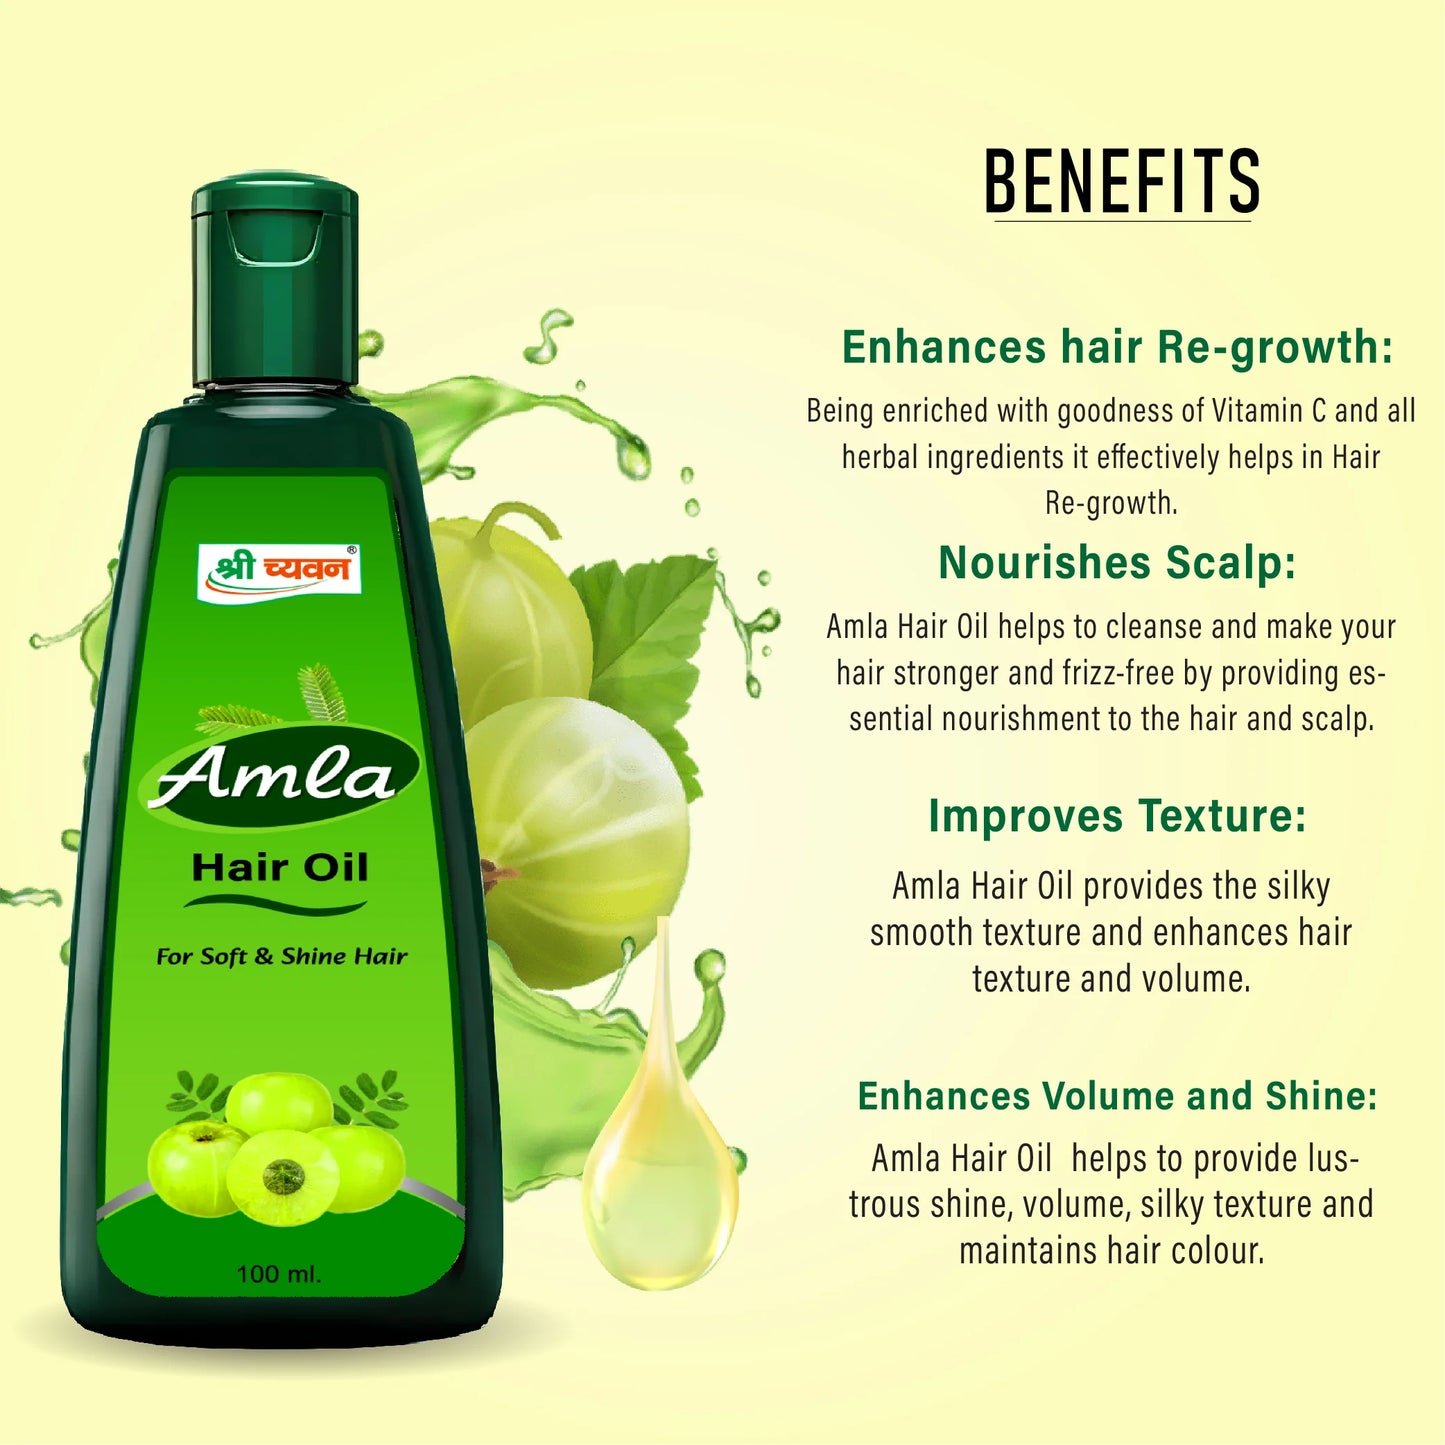 Amla Hair Oil - Benefits, Ingredients, Price